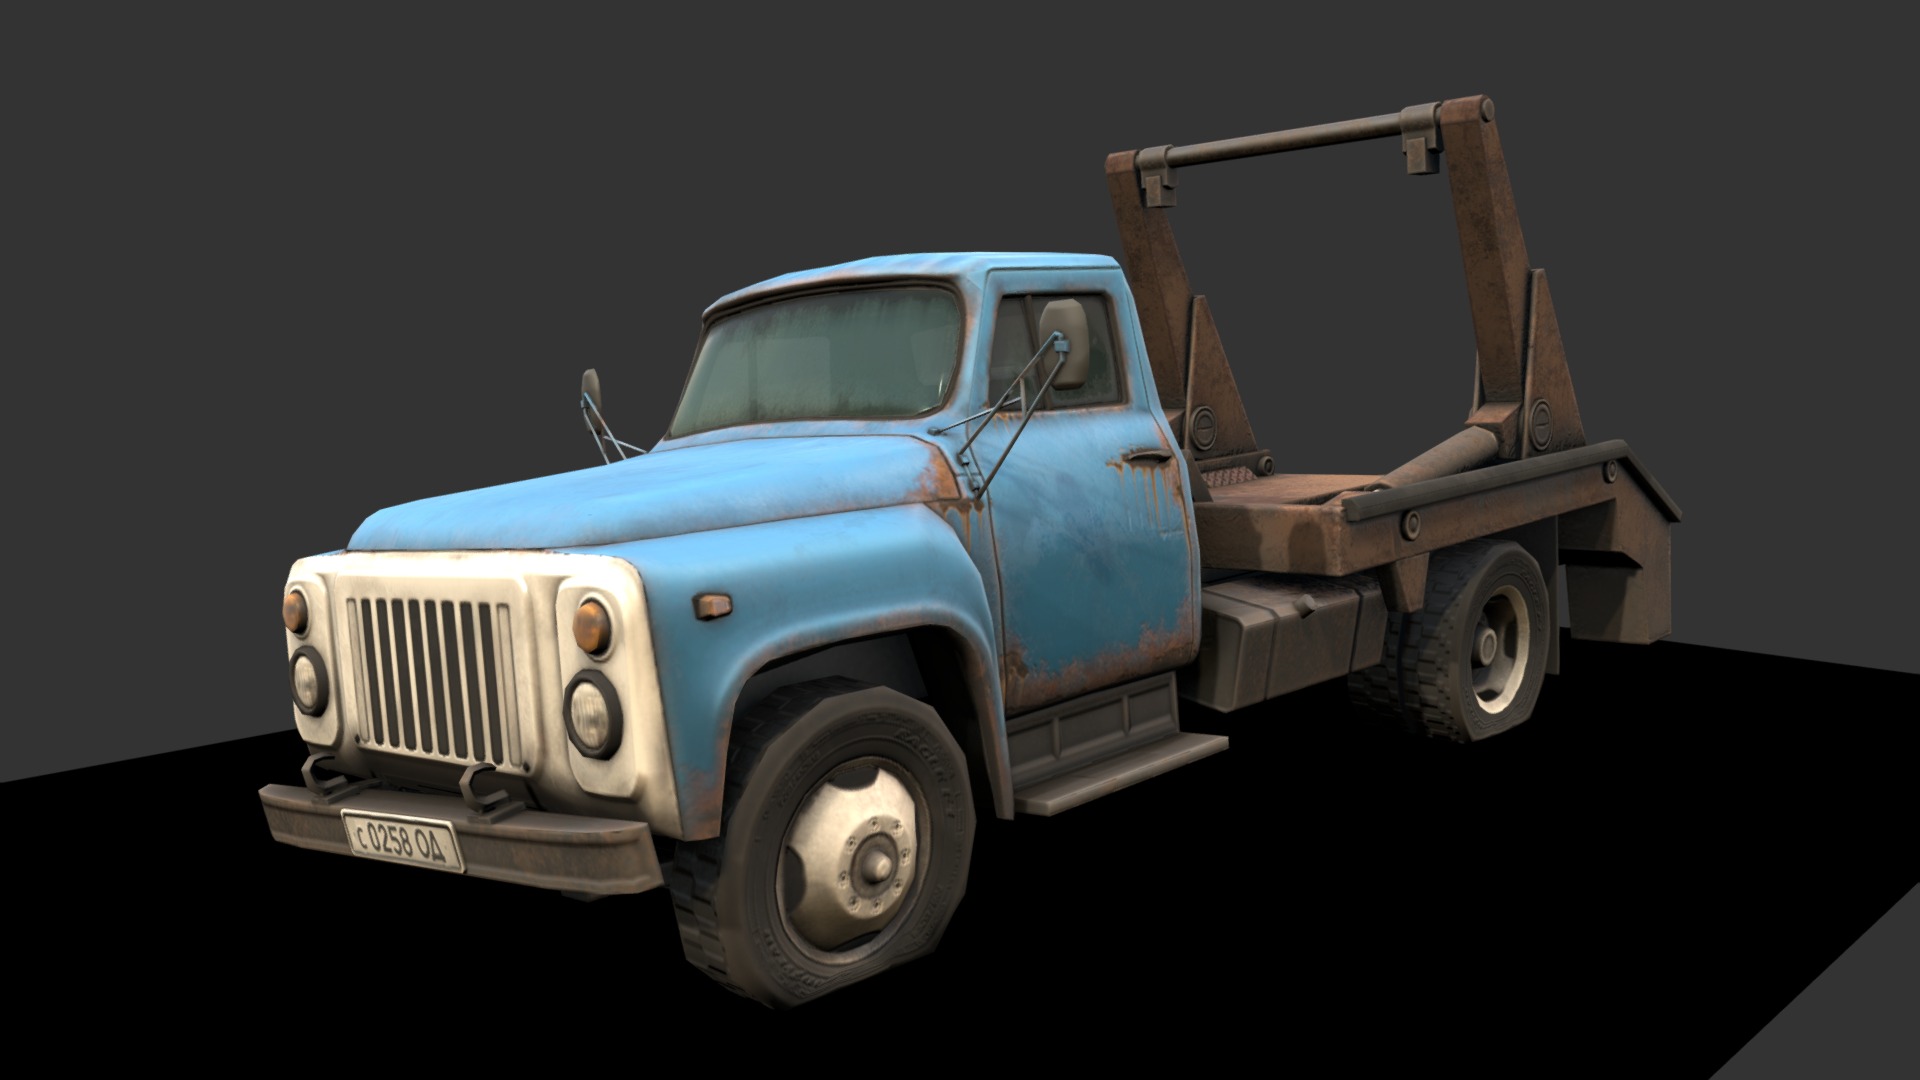 3D model Half-Life 2 – GAZ 52 (ГАЗ-52) - This is a 3D model of the Half-Life 2 - GAZ 52 (ГАЗ-52). The 3D model is about a blue truck with a trailer.